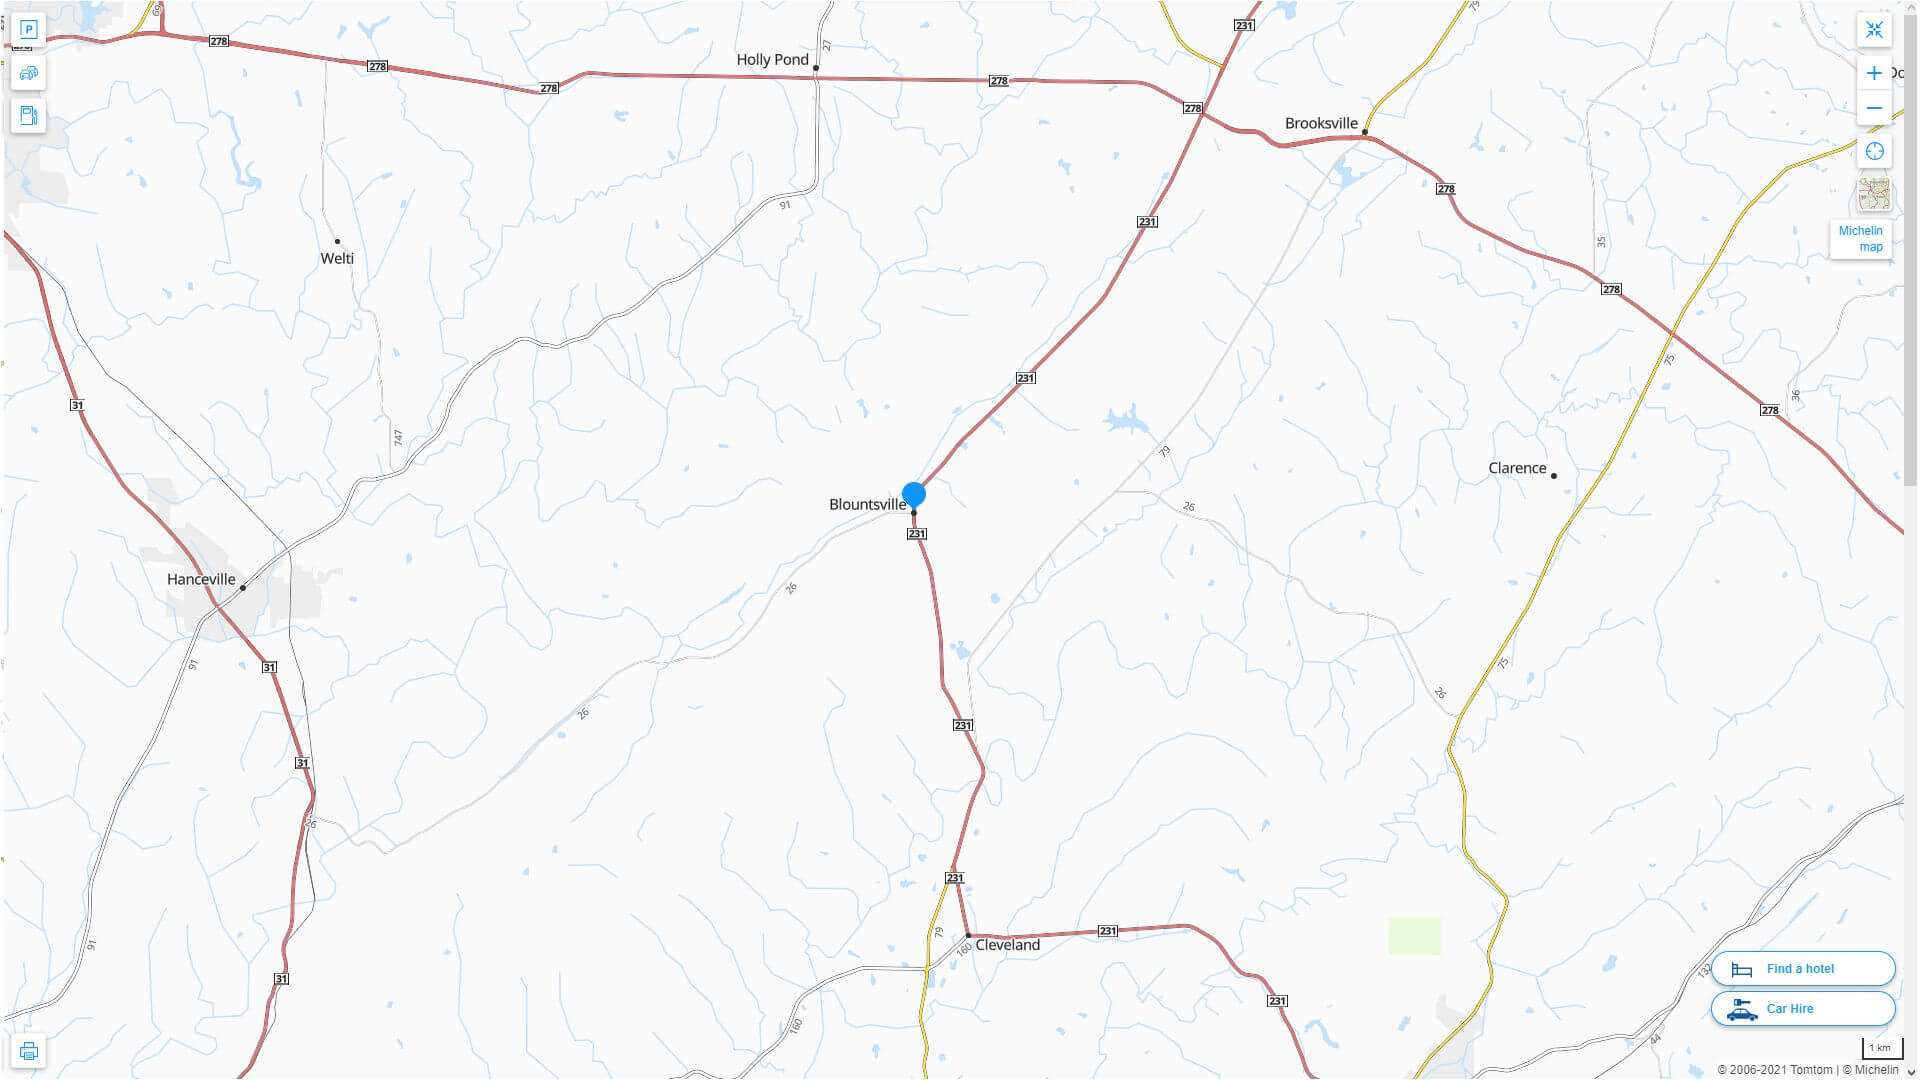 Blountsville Alabama Highway and Road Map